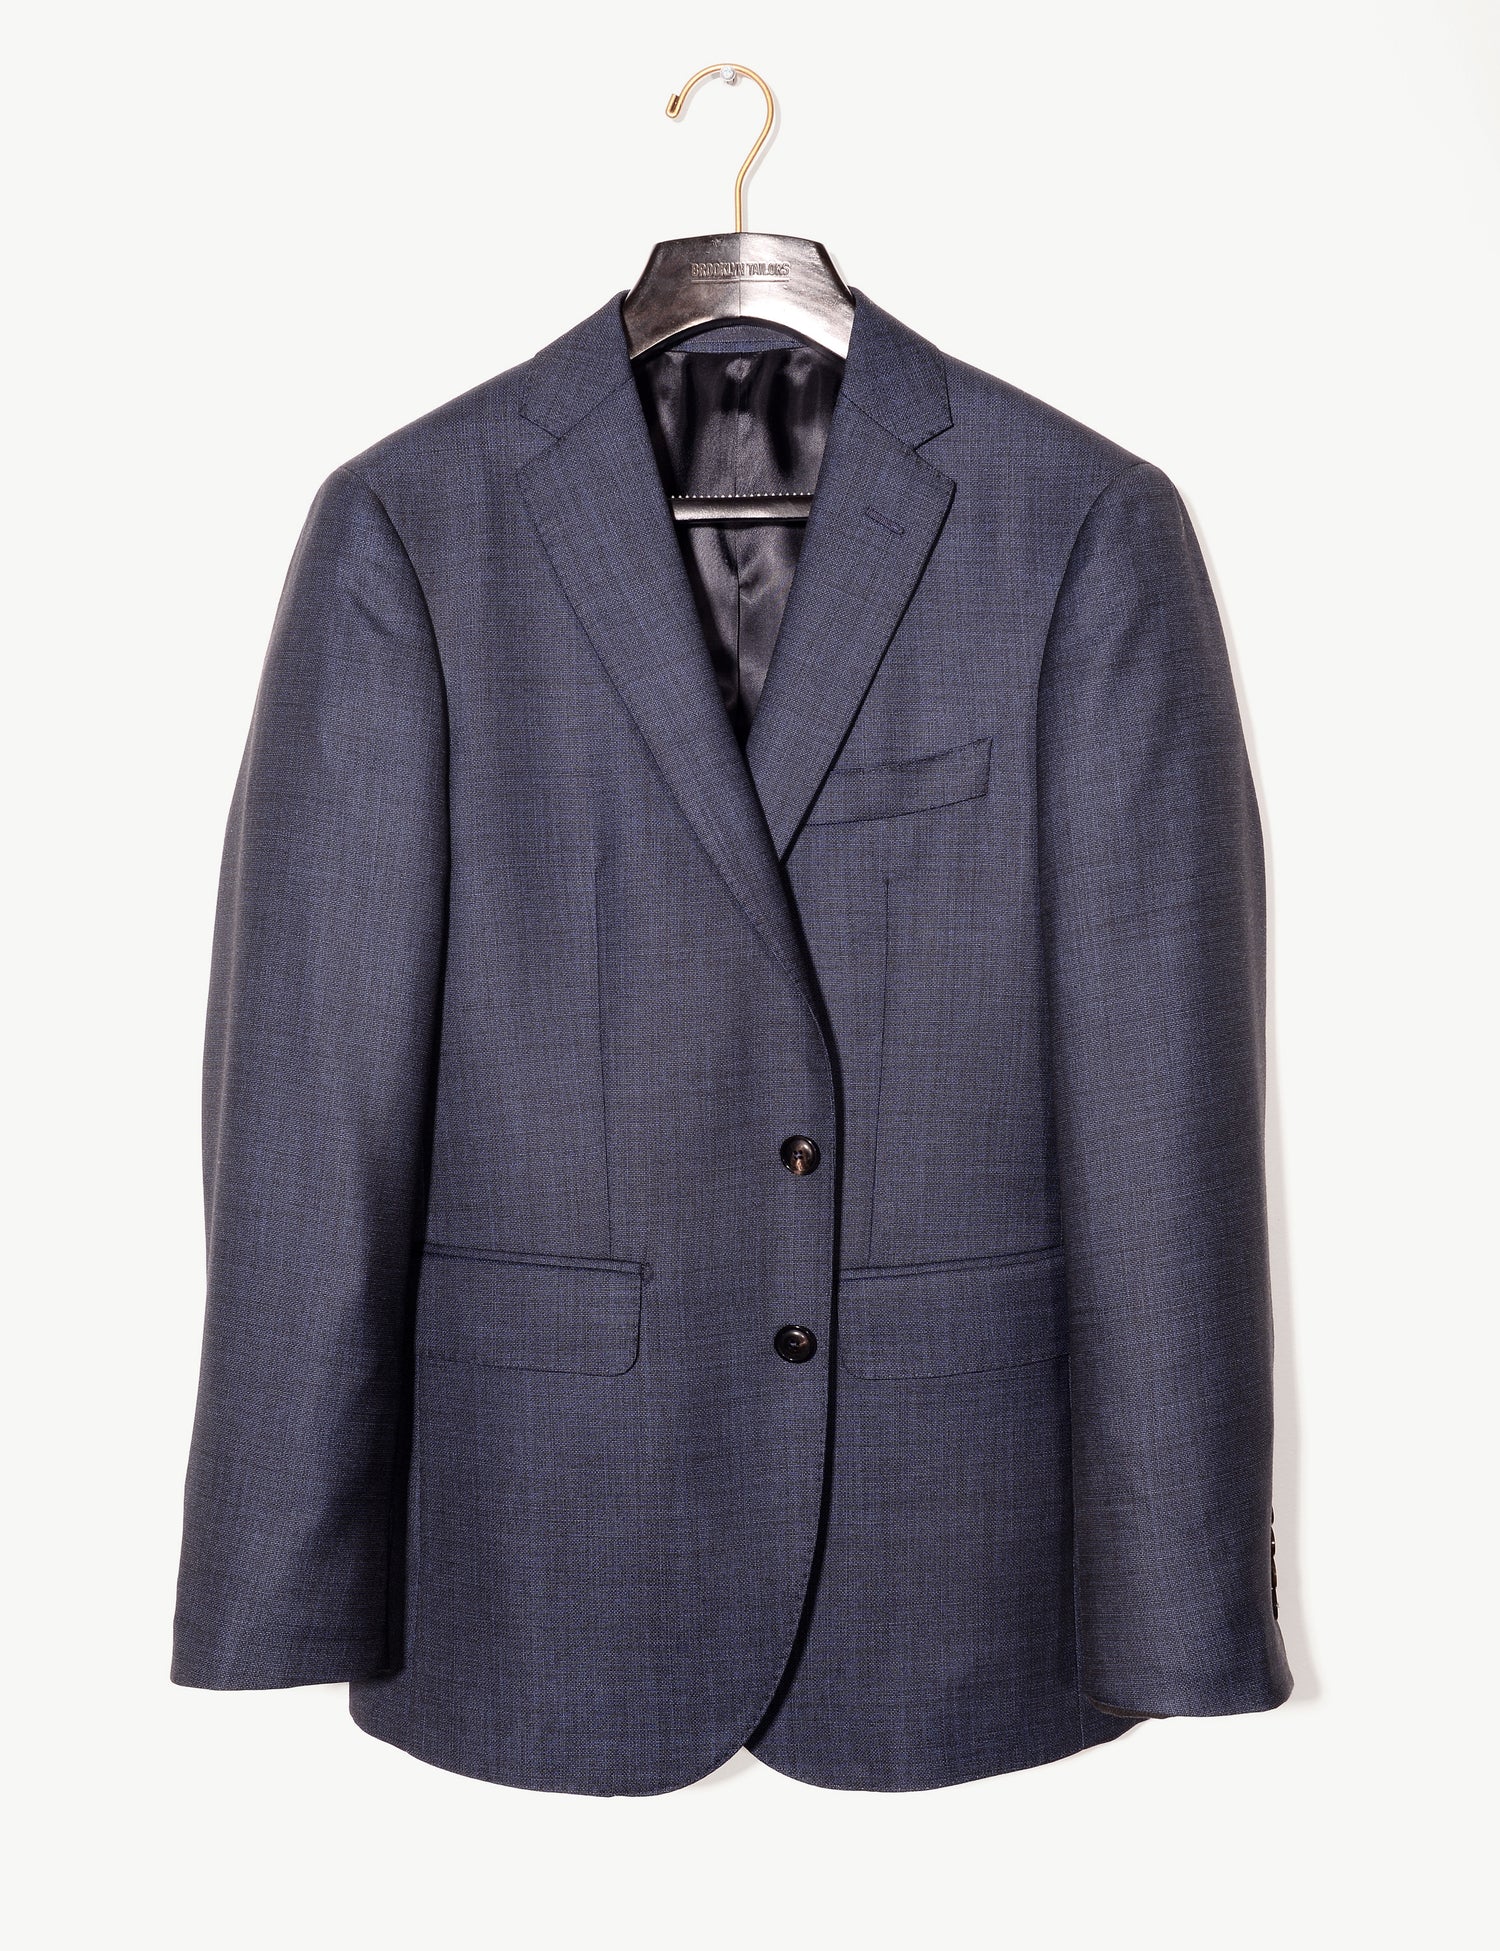 Brooklyn Tailors BKT50 Tailored Jacket in Textured Wool - Deep Sea full length shot on hanger